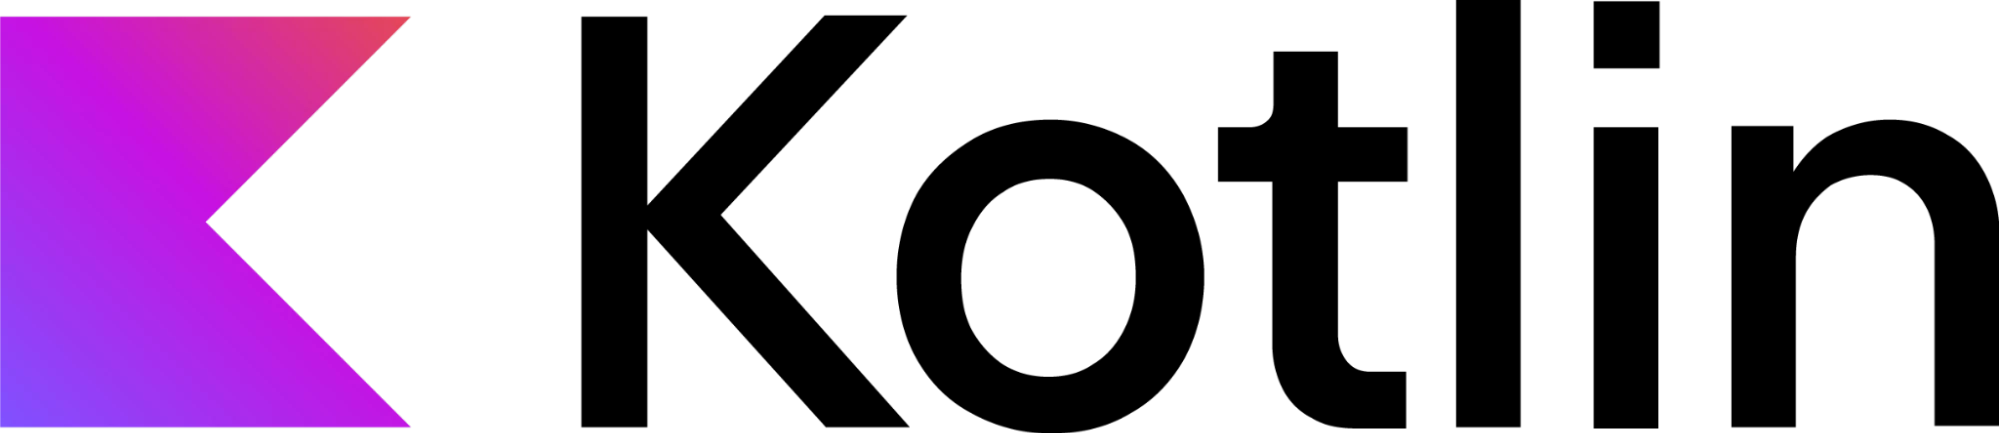 Kotlinのロゴ画像